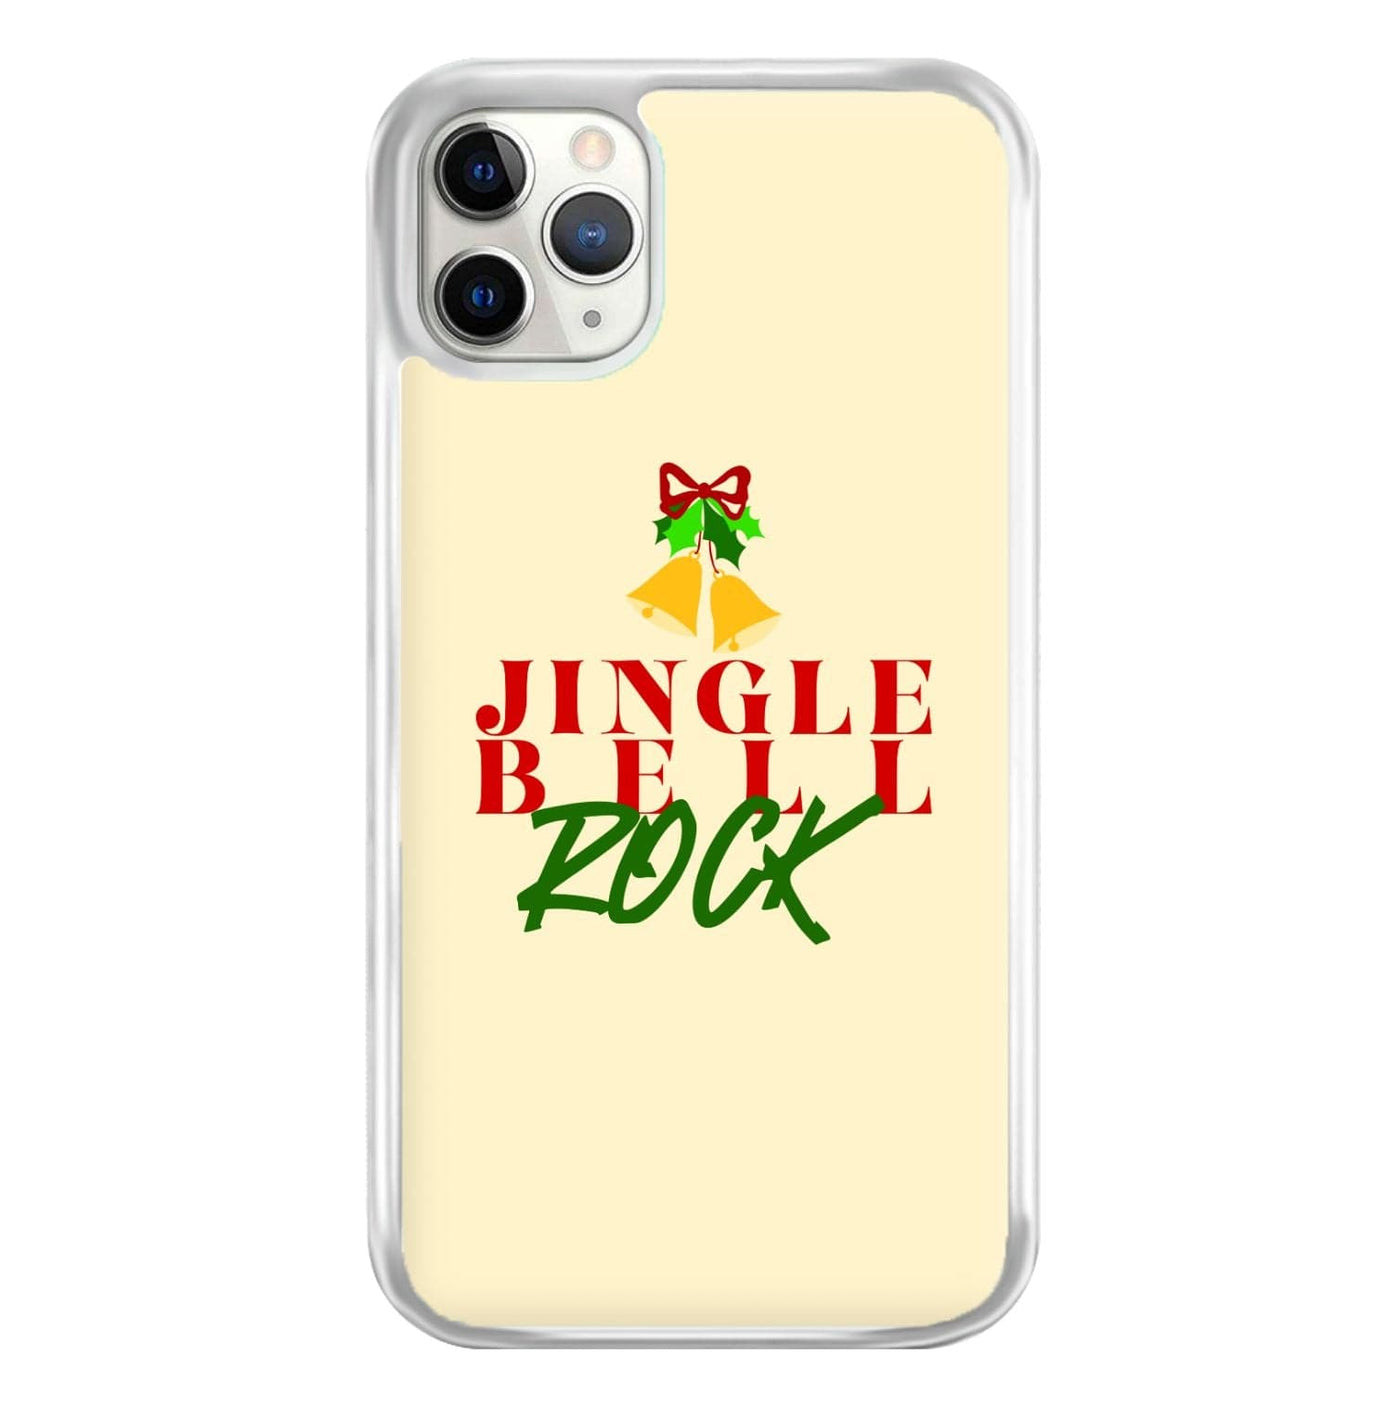 Jingle Bell Rock - Christmas Songs Phone Case